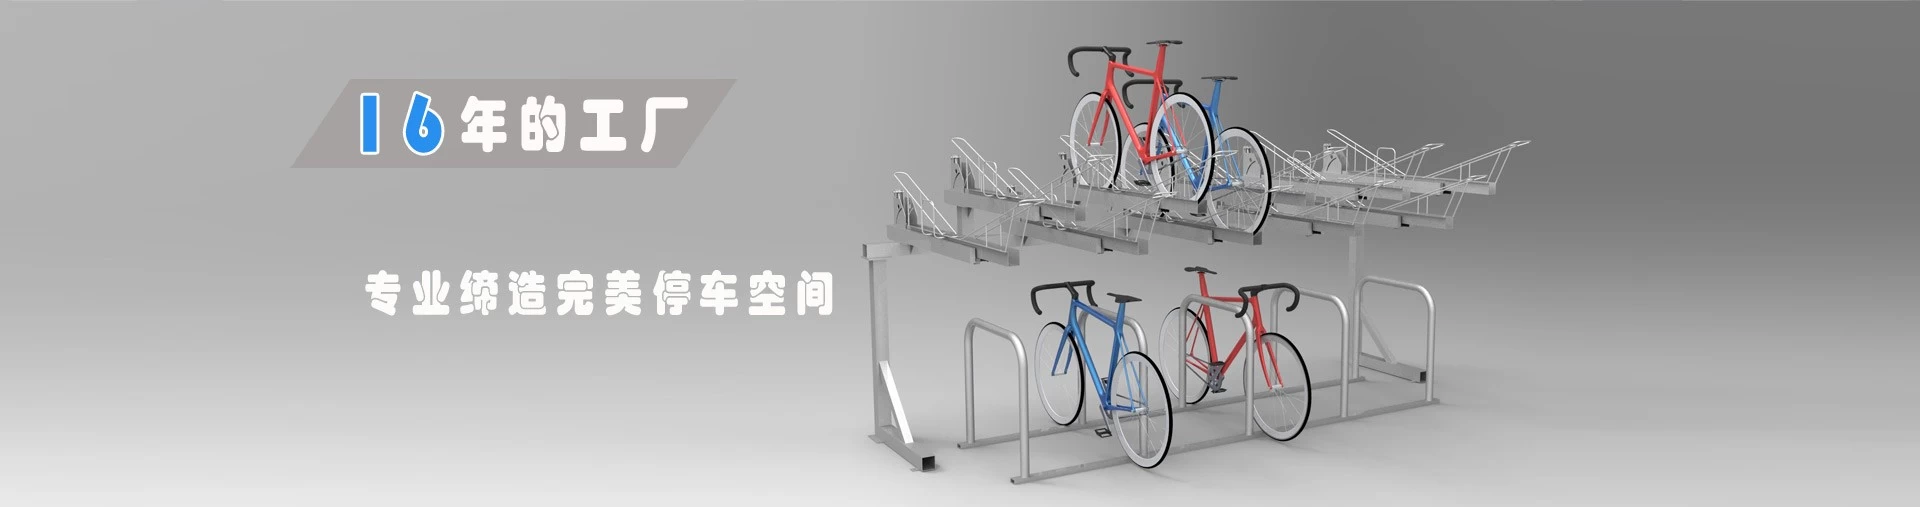 bike rack